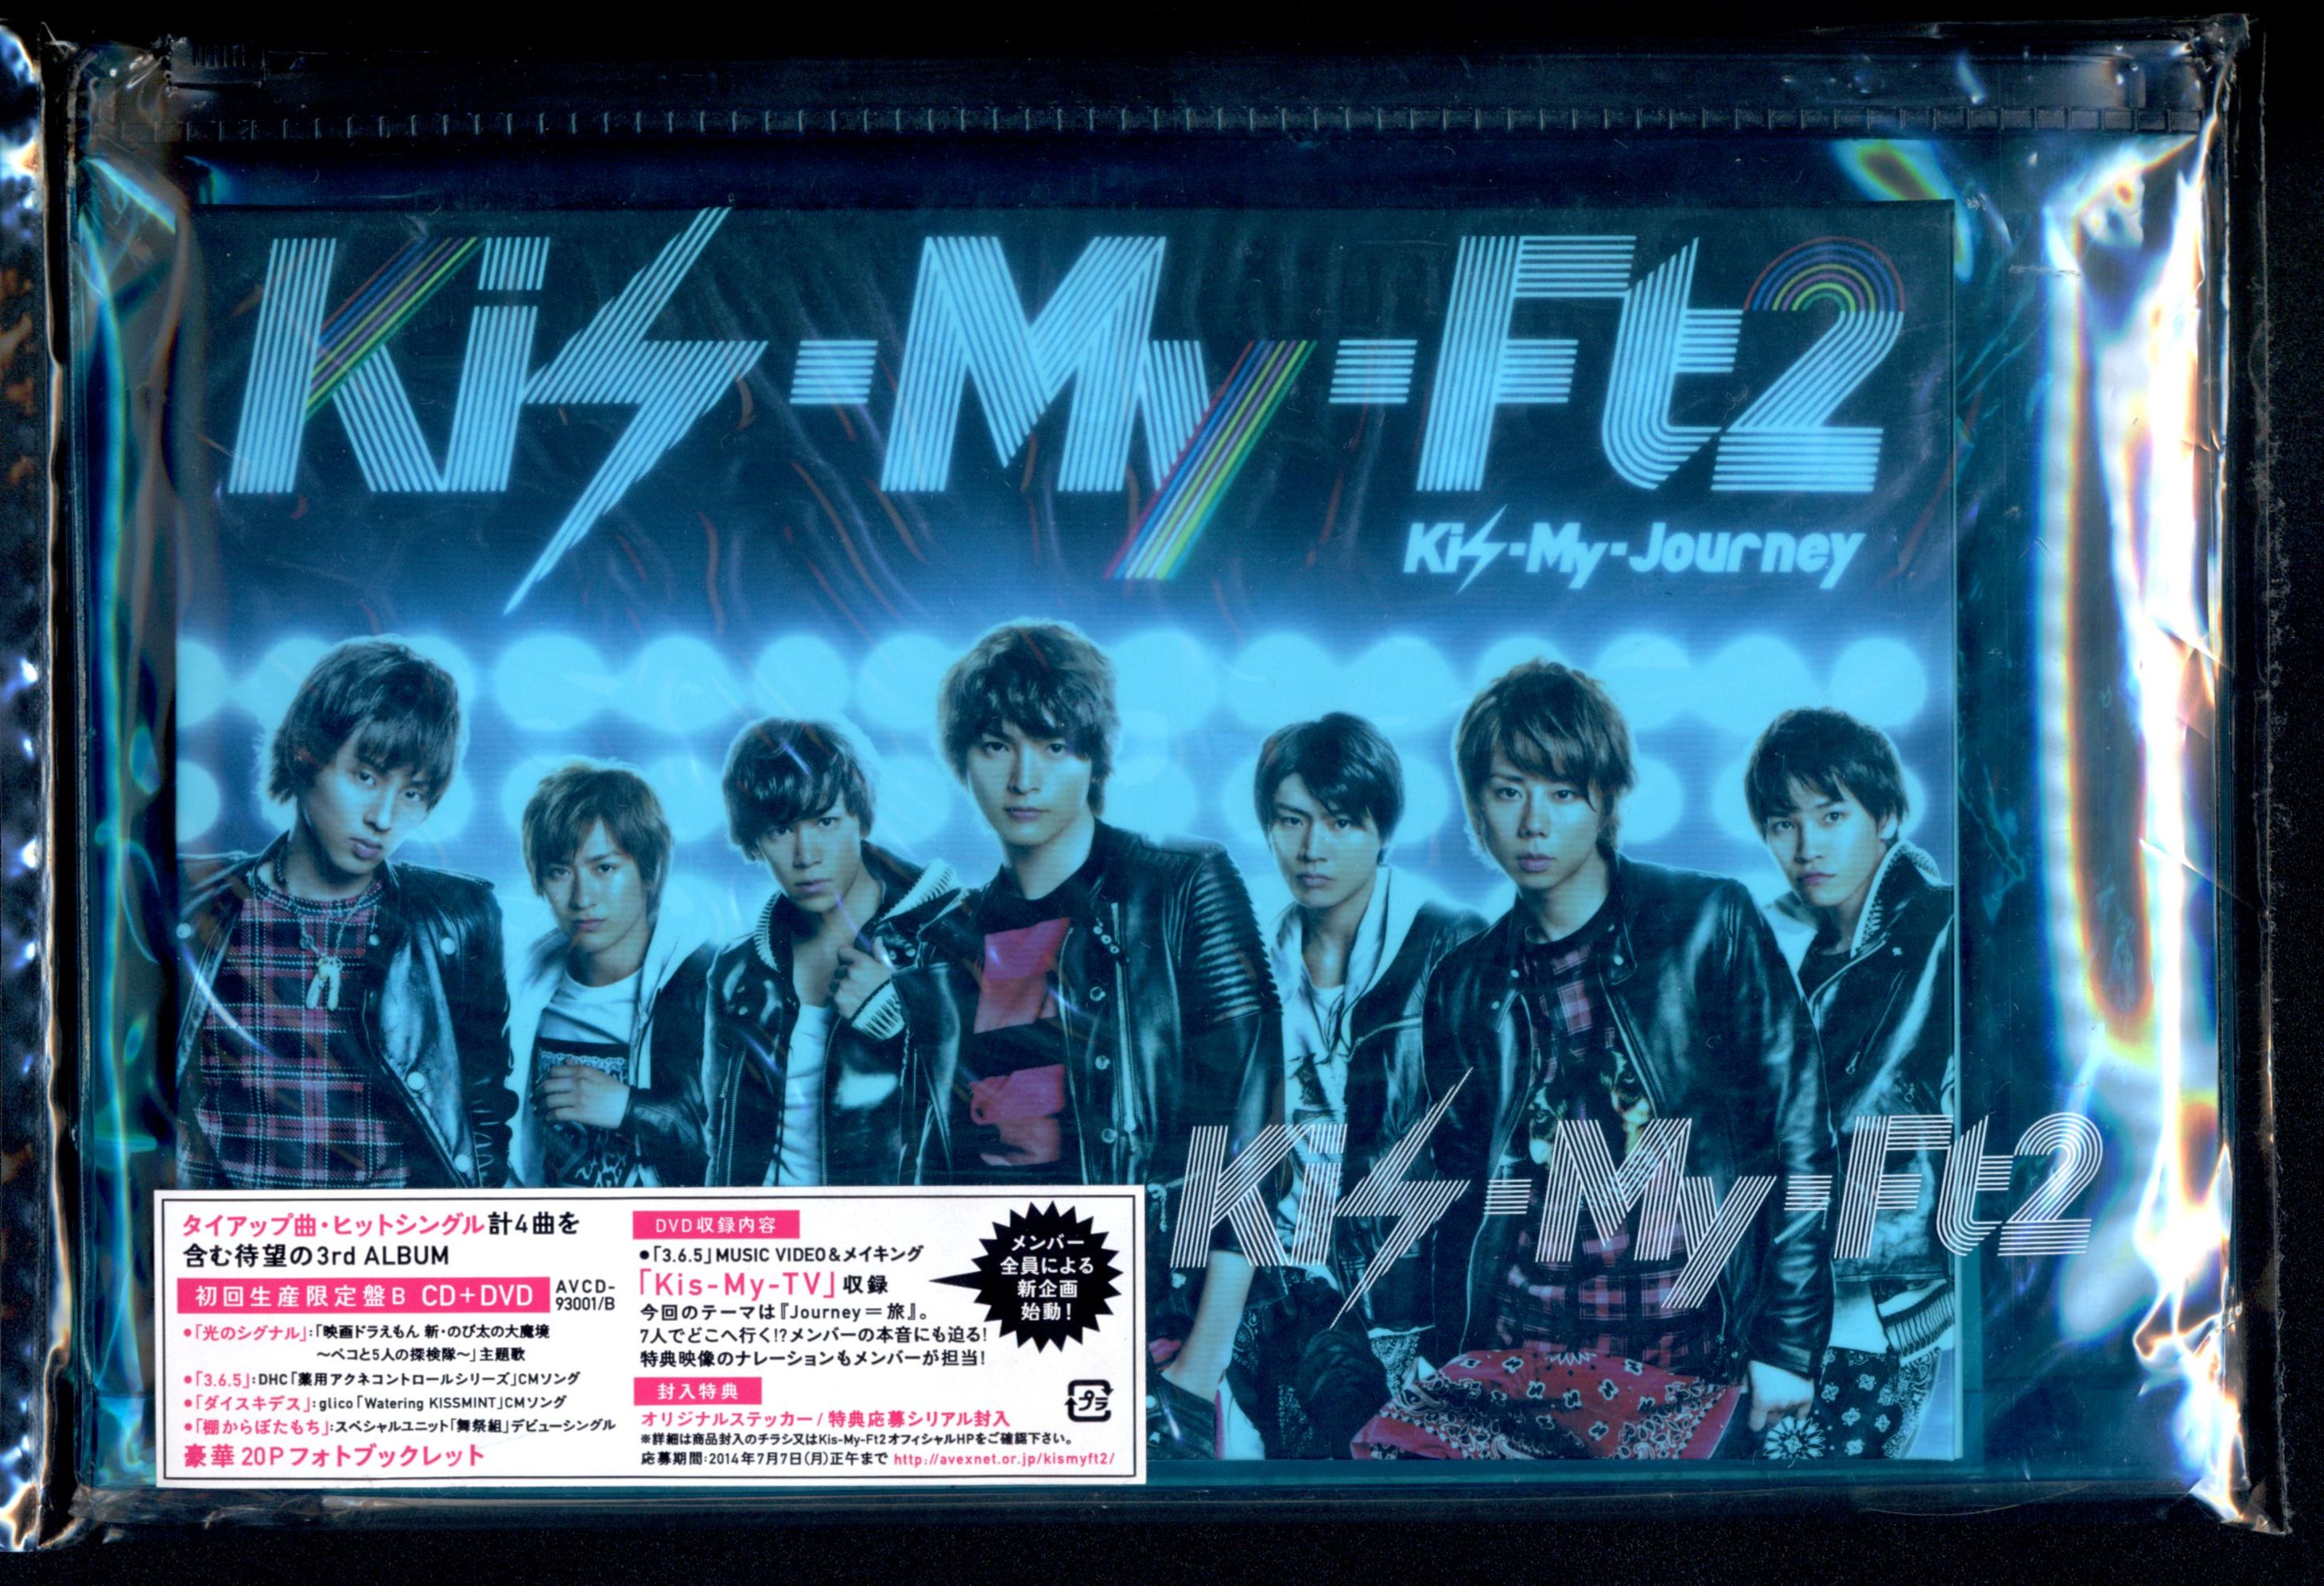 Kis-My-Ft2 Kis-My-Journey 初回盤Ｂ *CD+DVD 3.6.5ミュージックビデオ 